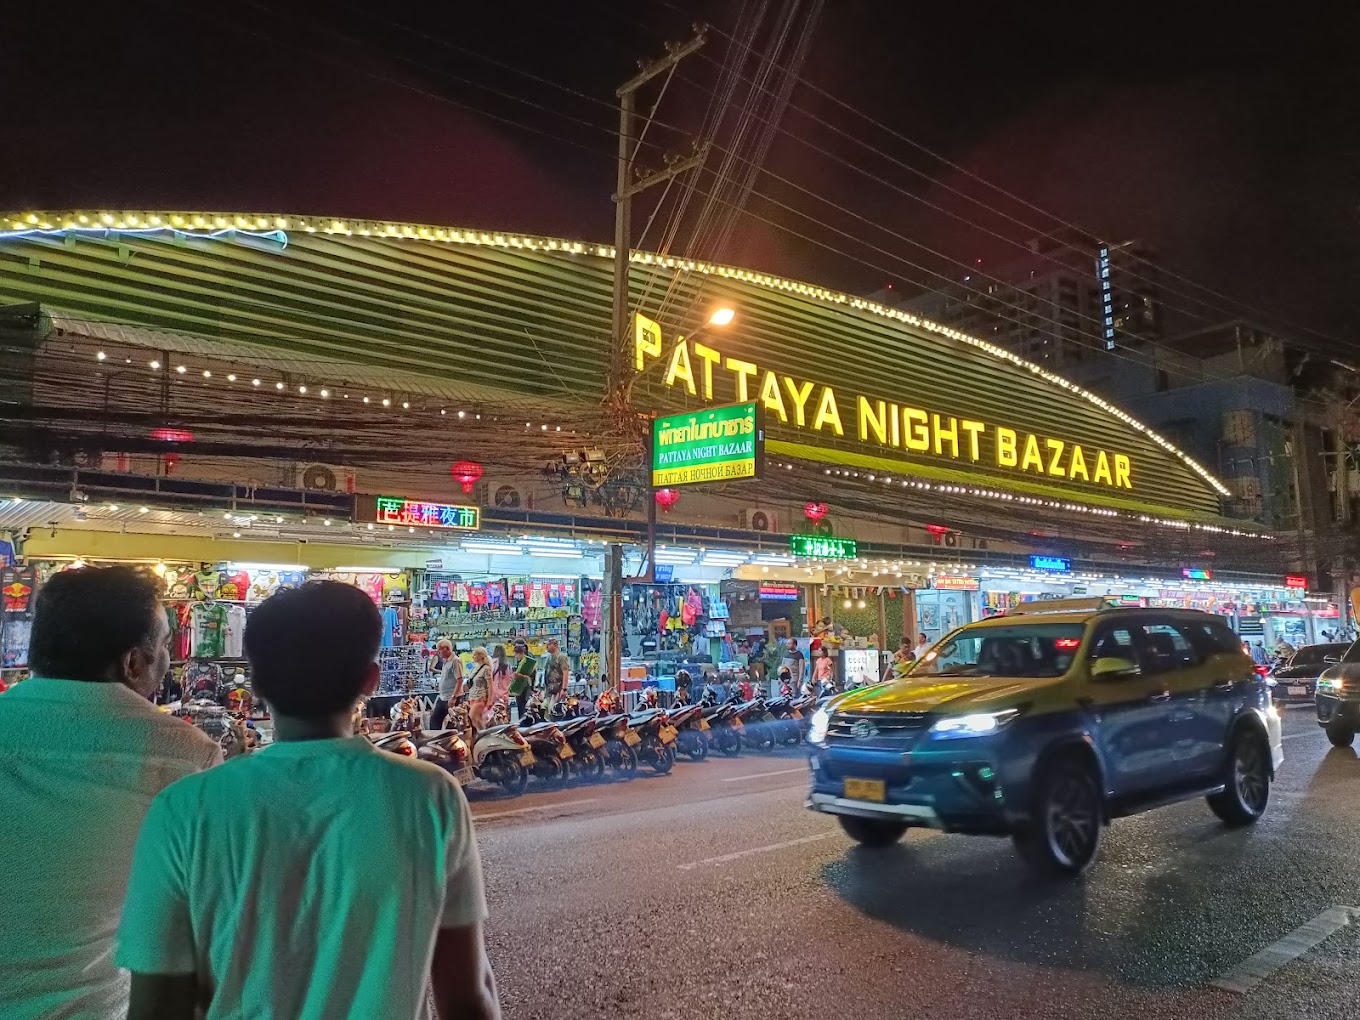 Pattaya%20Night%20Bazaar%201.jpg